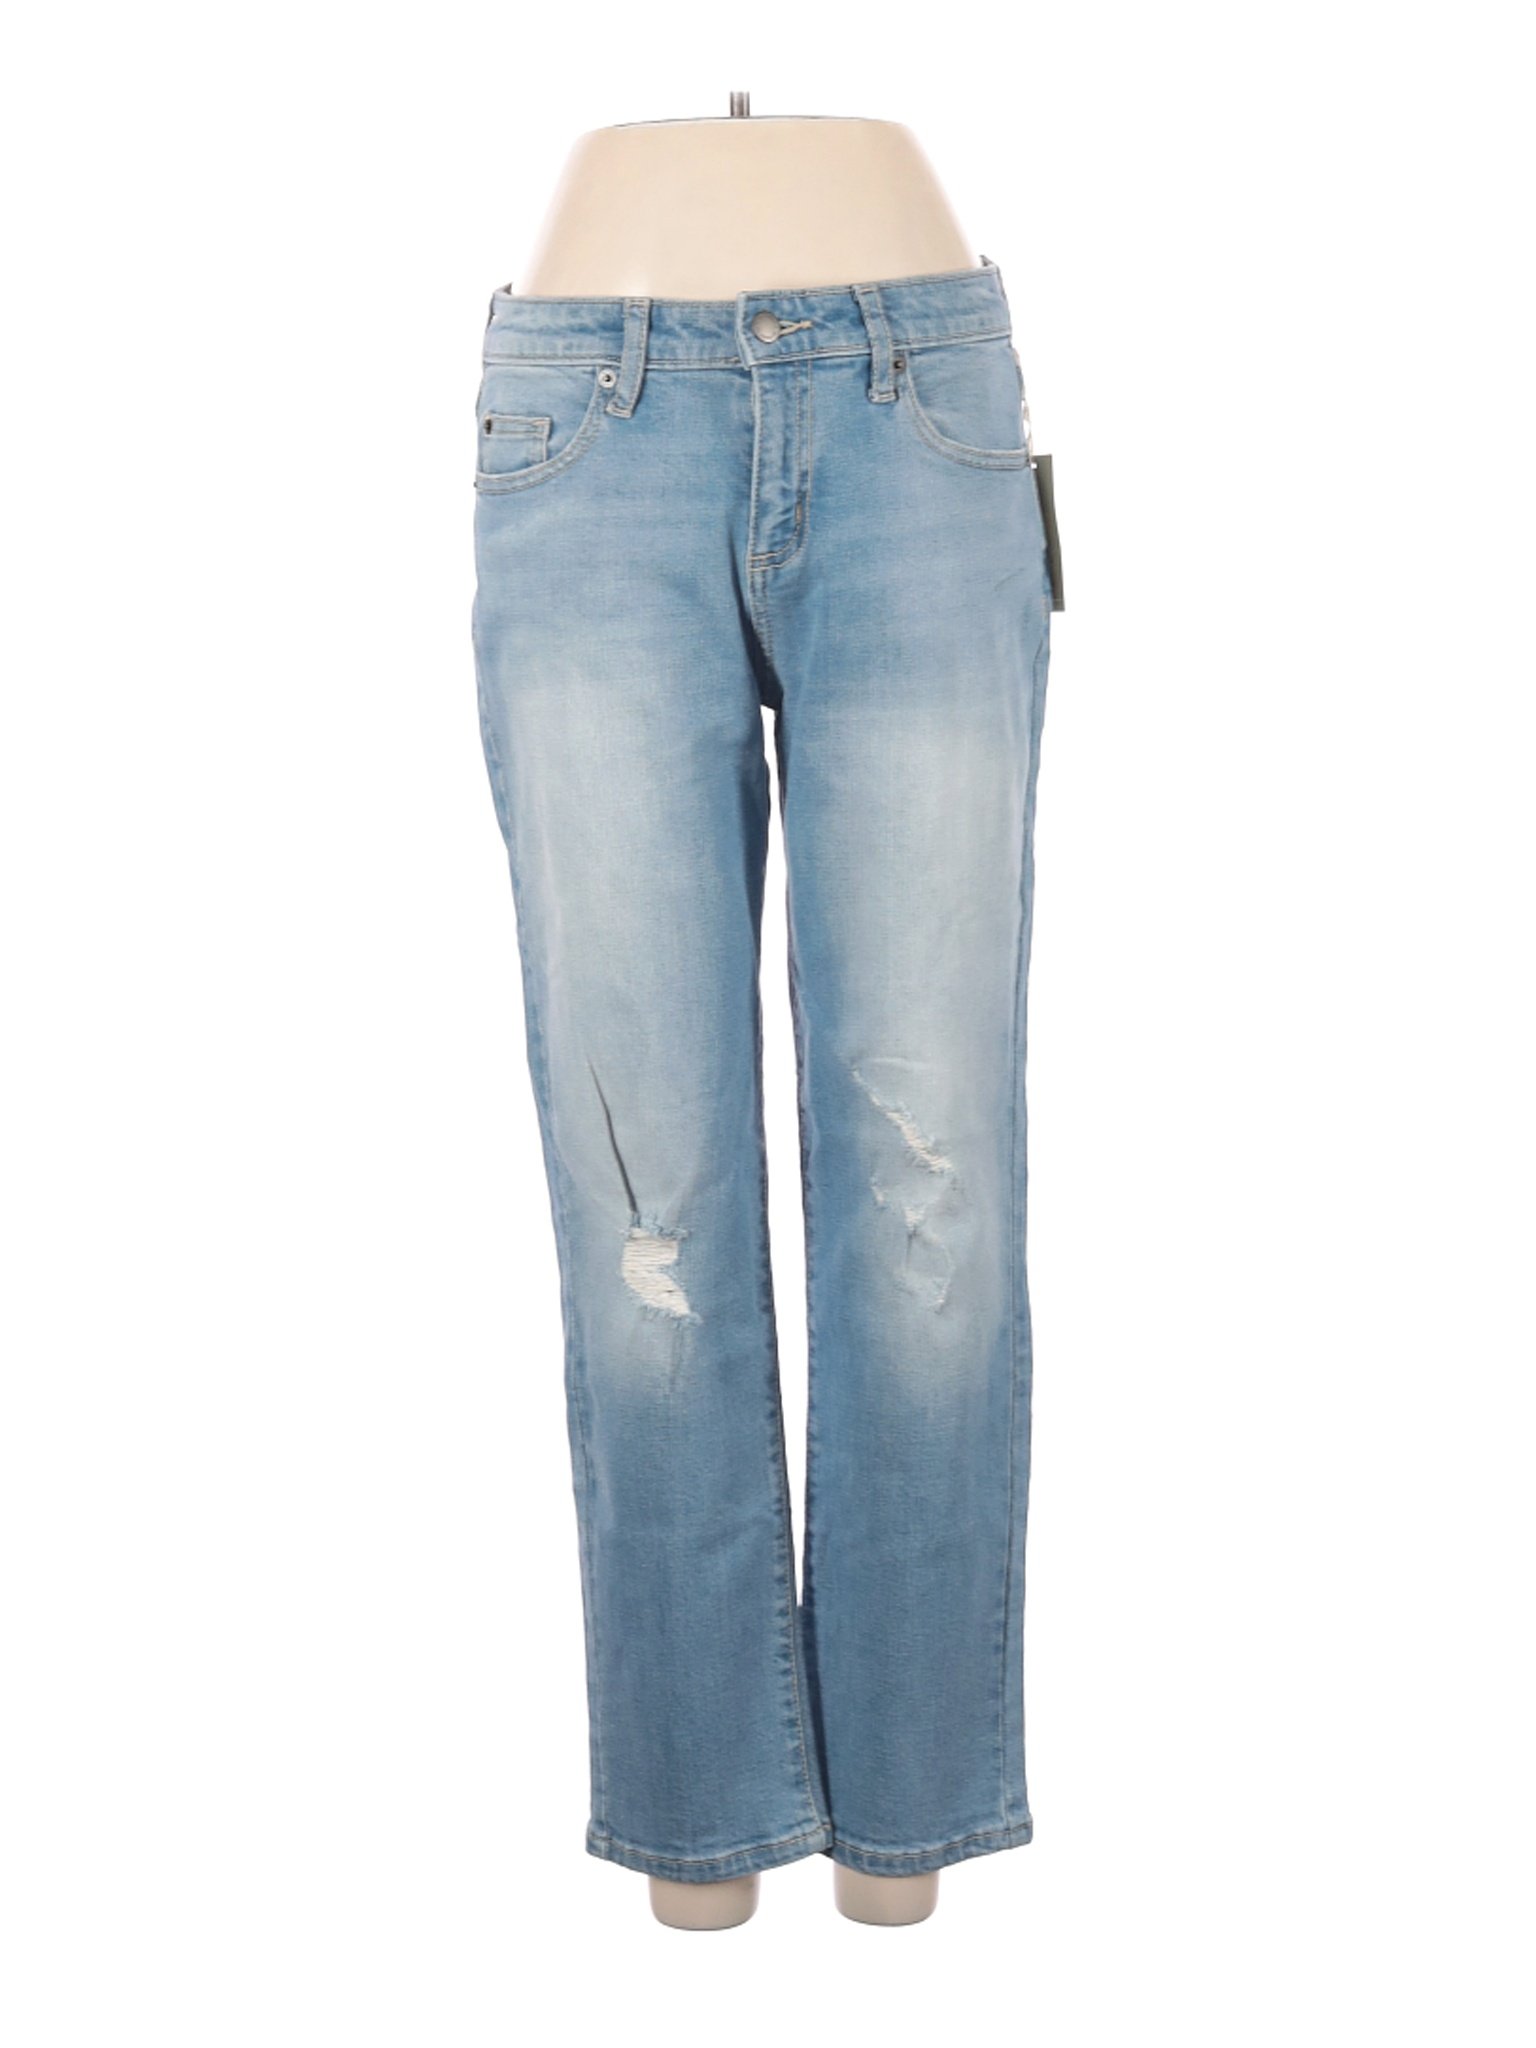 NWT Universal Thread Women Blue Jeans 4 | eBay